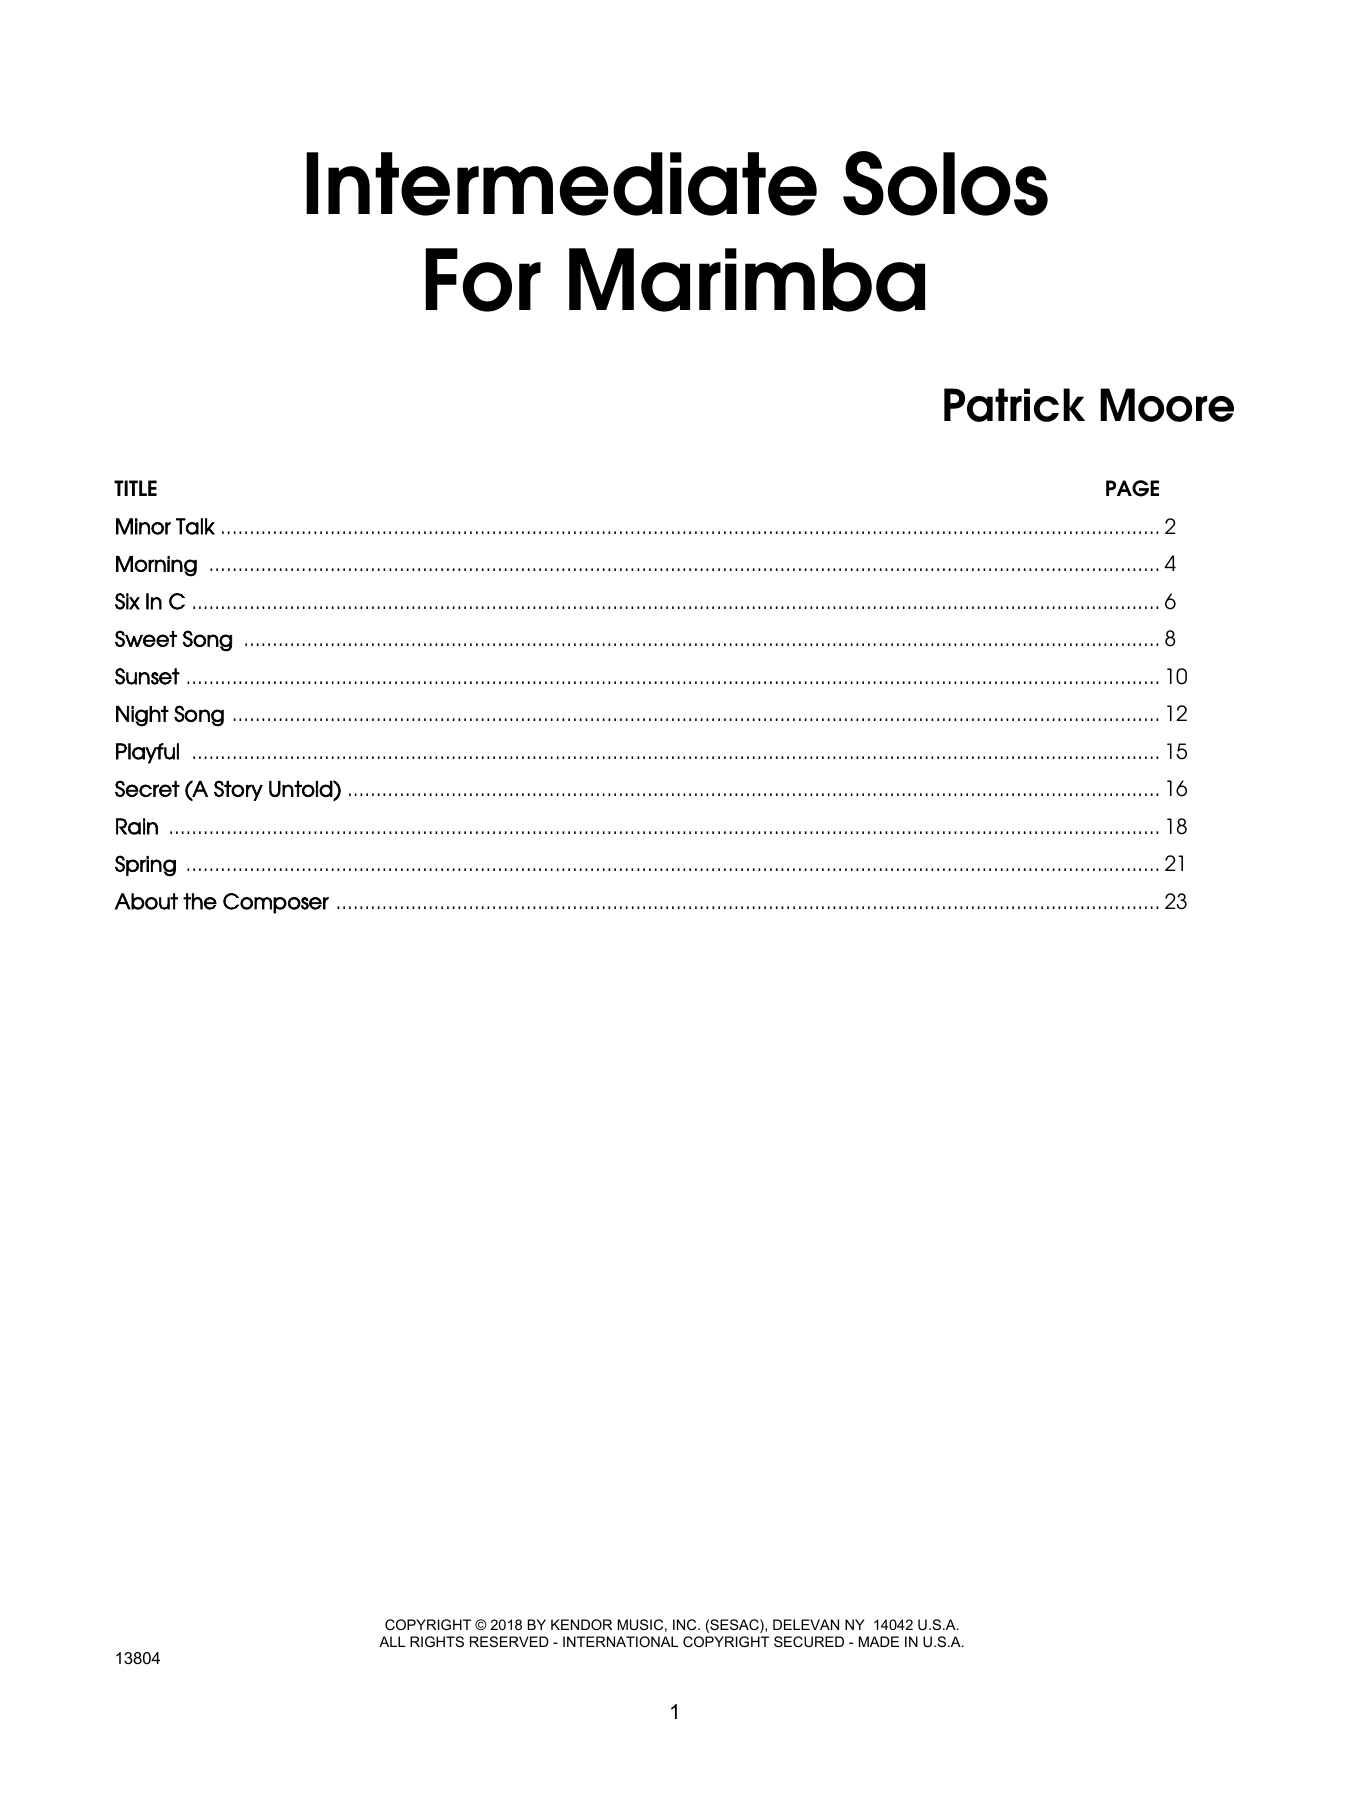 Download James Moore Intermediate Solos For Marimba Sheet Music